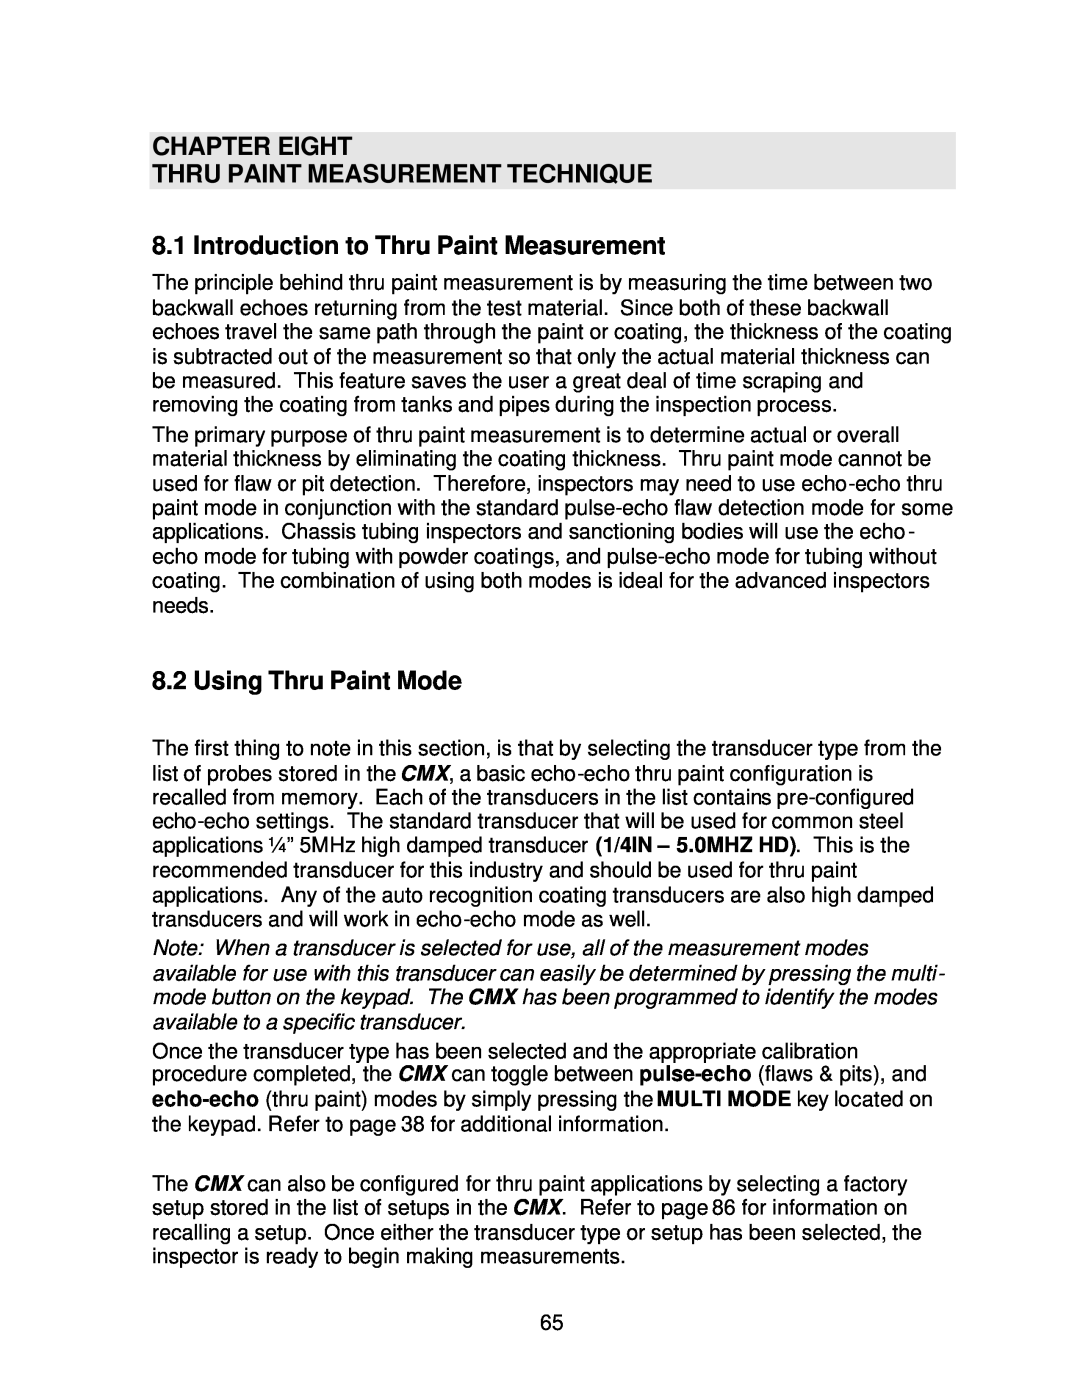 Dakota Digital CMX operation manual Chapter Eight Thru Paint Measurement Technique, Introduction to Thru Paint Measurement 